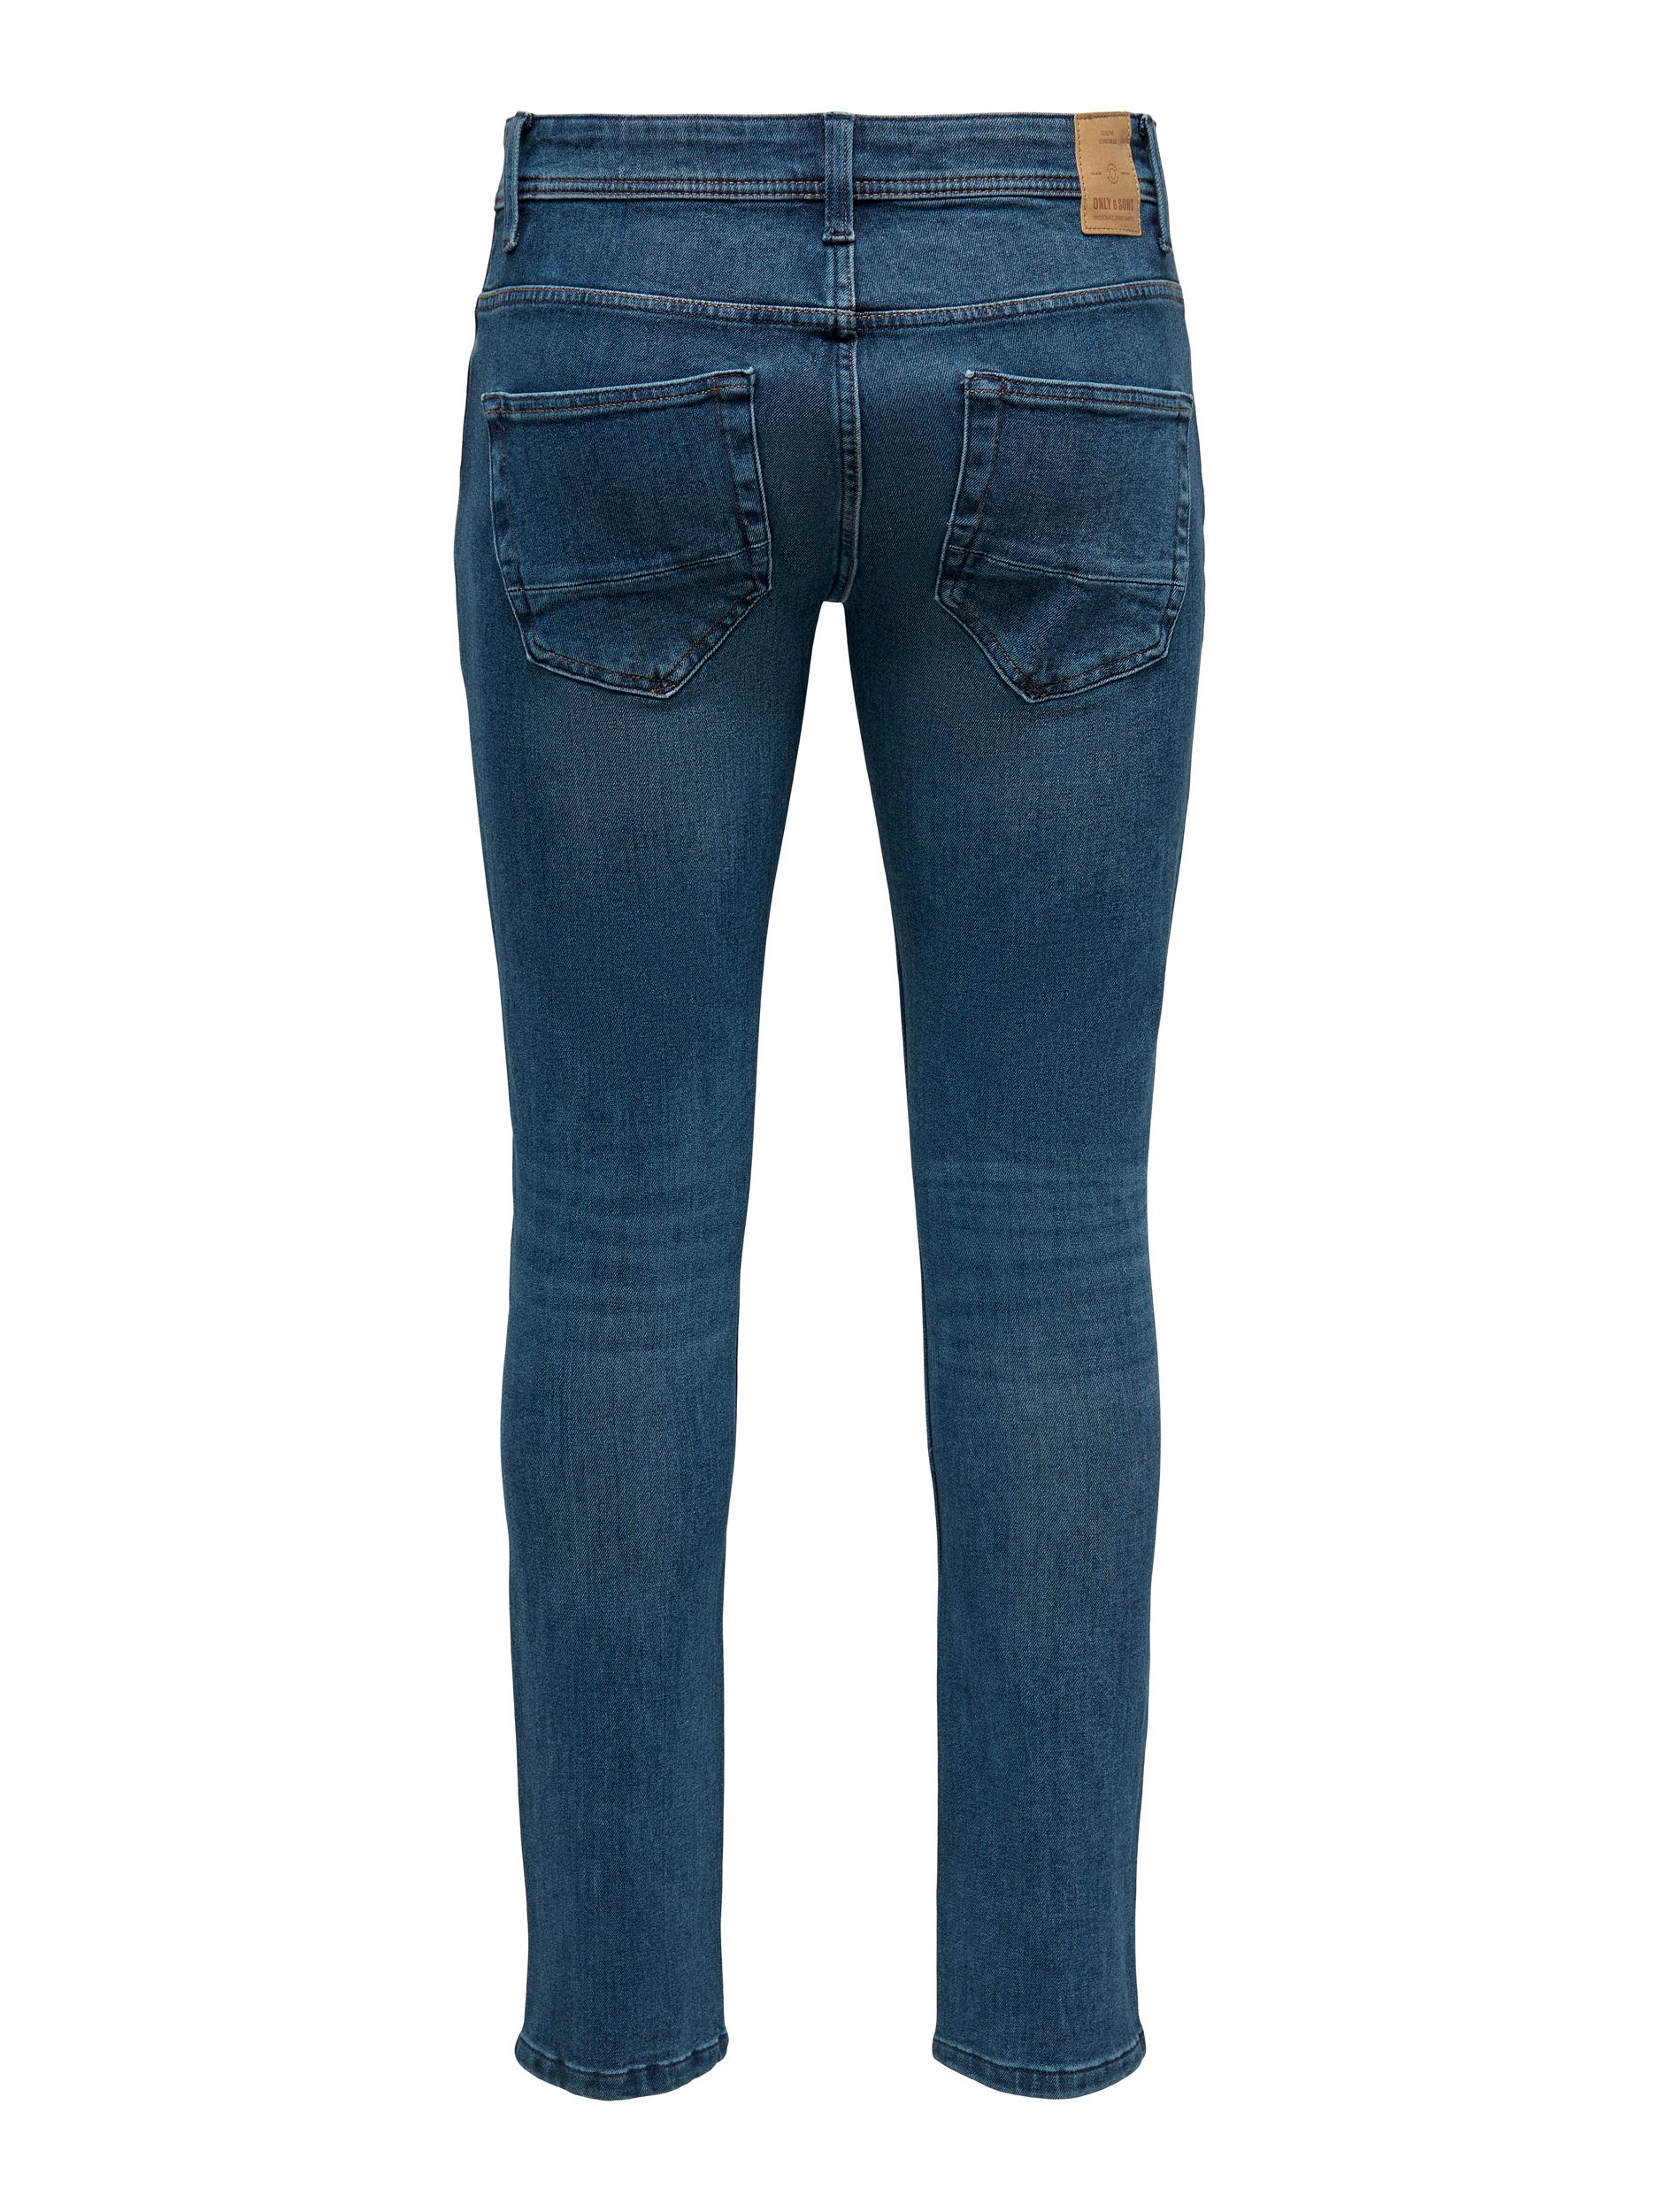 ONLY Loom Life Slim Jeans, Blue Denim, W28/L32